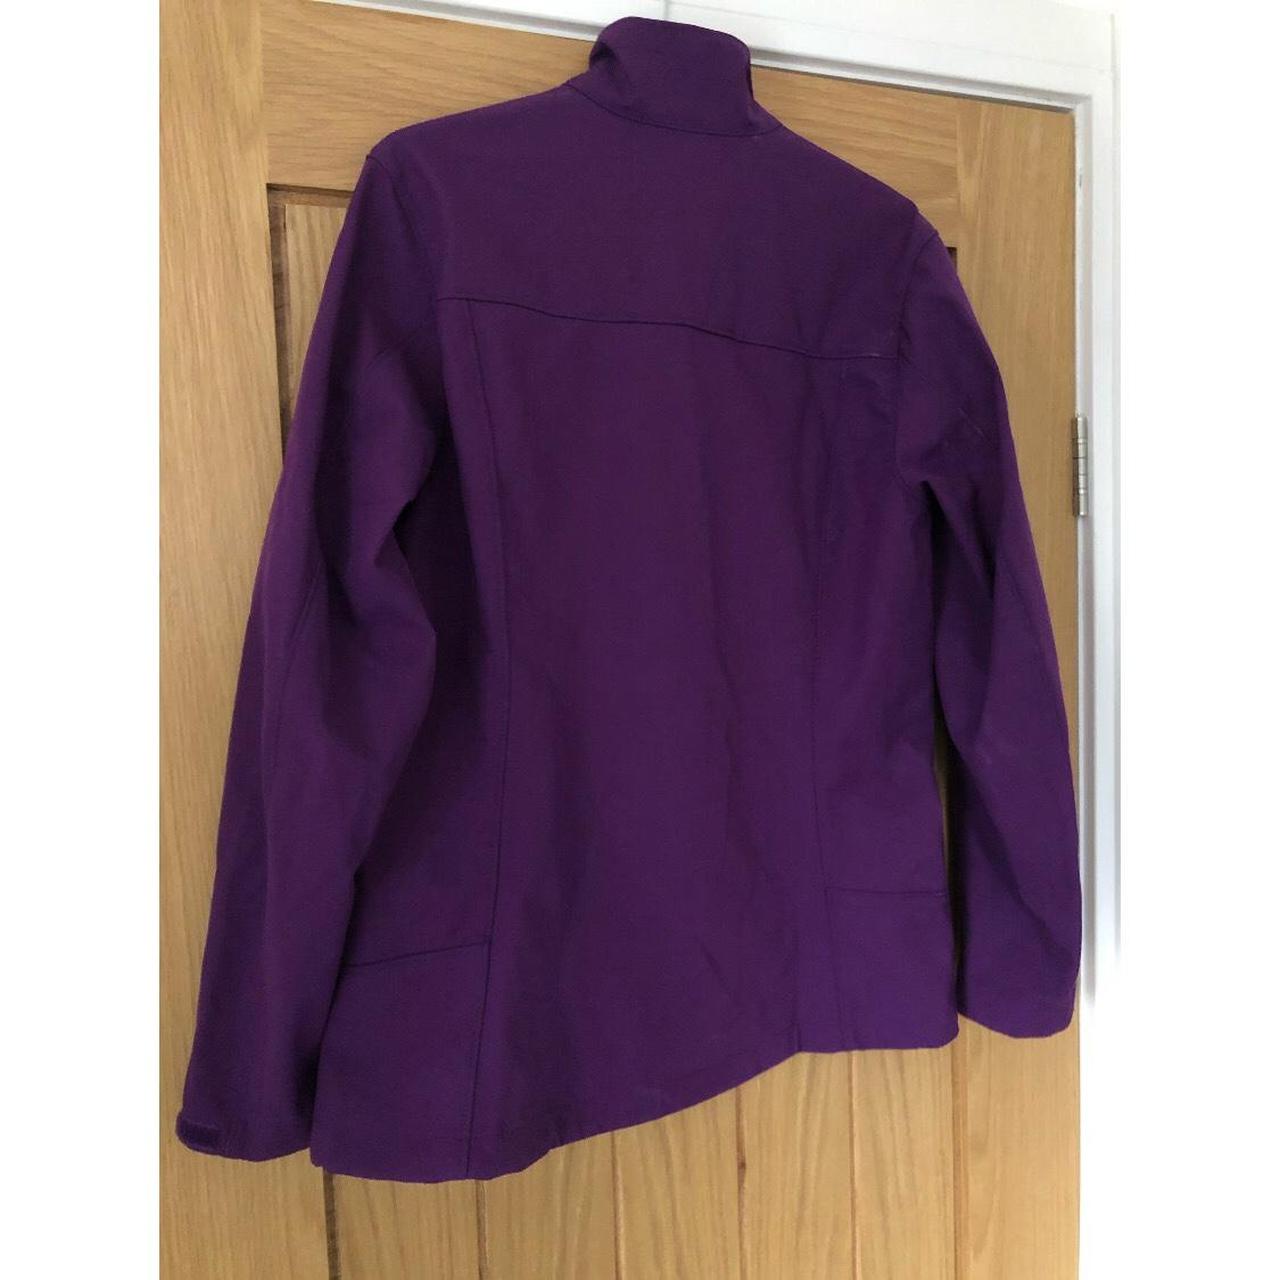 Purple Karrimor Soft Shell Jacket. Size 12, would... - Depop